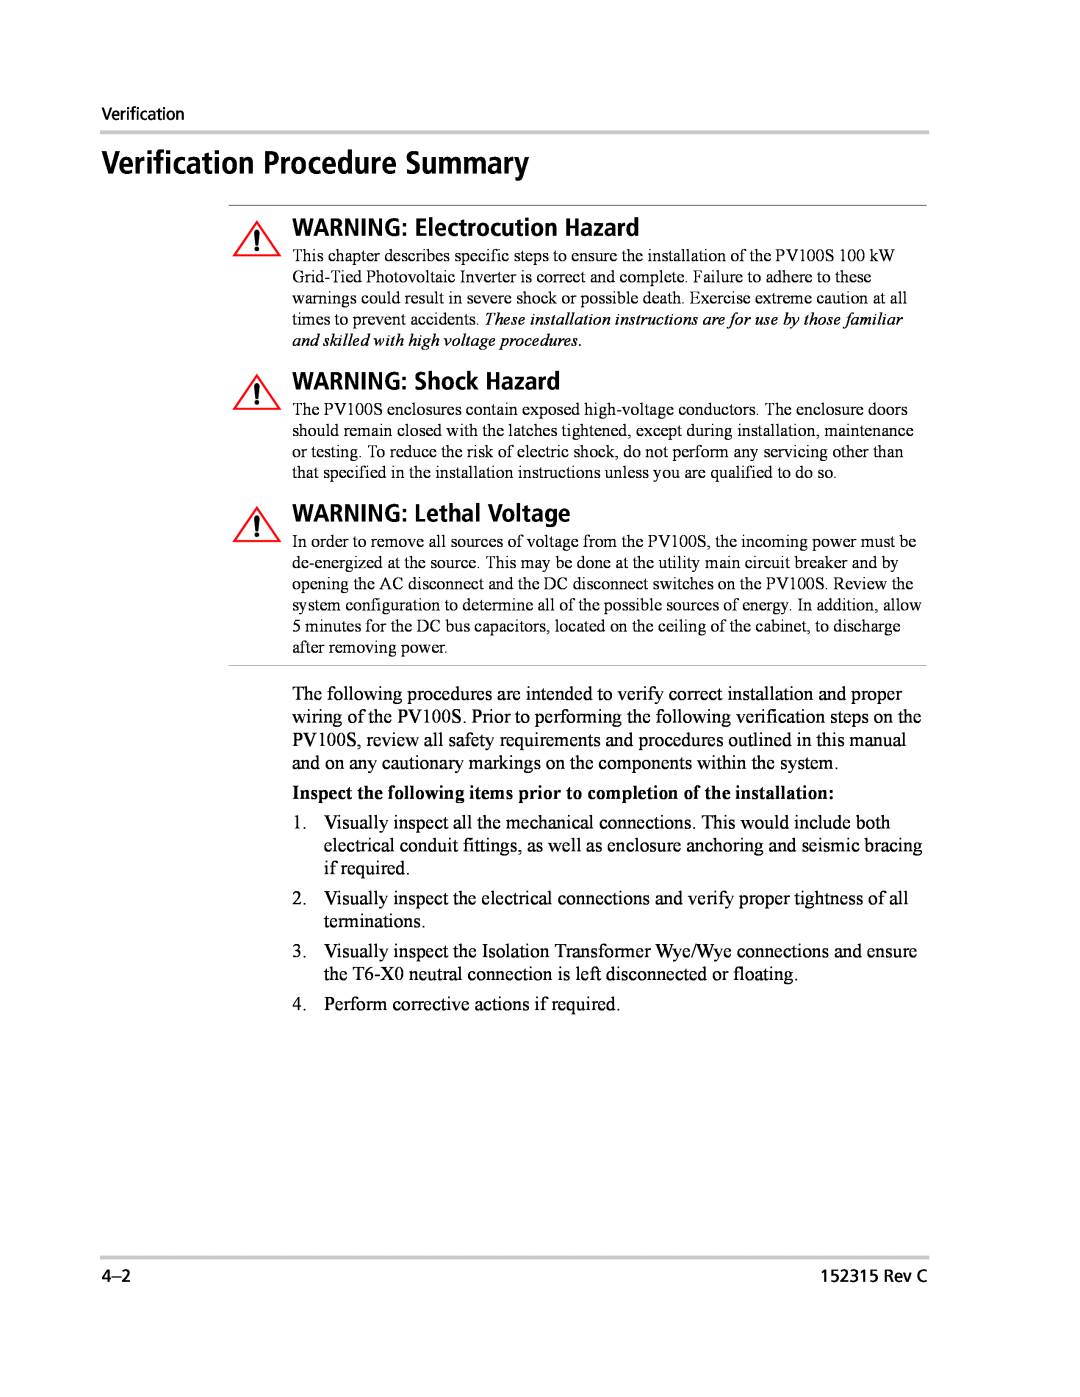 Xantrex Technology PV100S-480 Verification Procedure Summary, WARNING Electrocution Hazard, WARNING Shock Hazard 